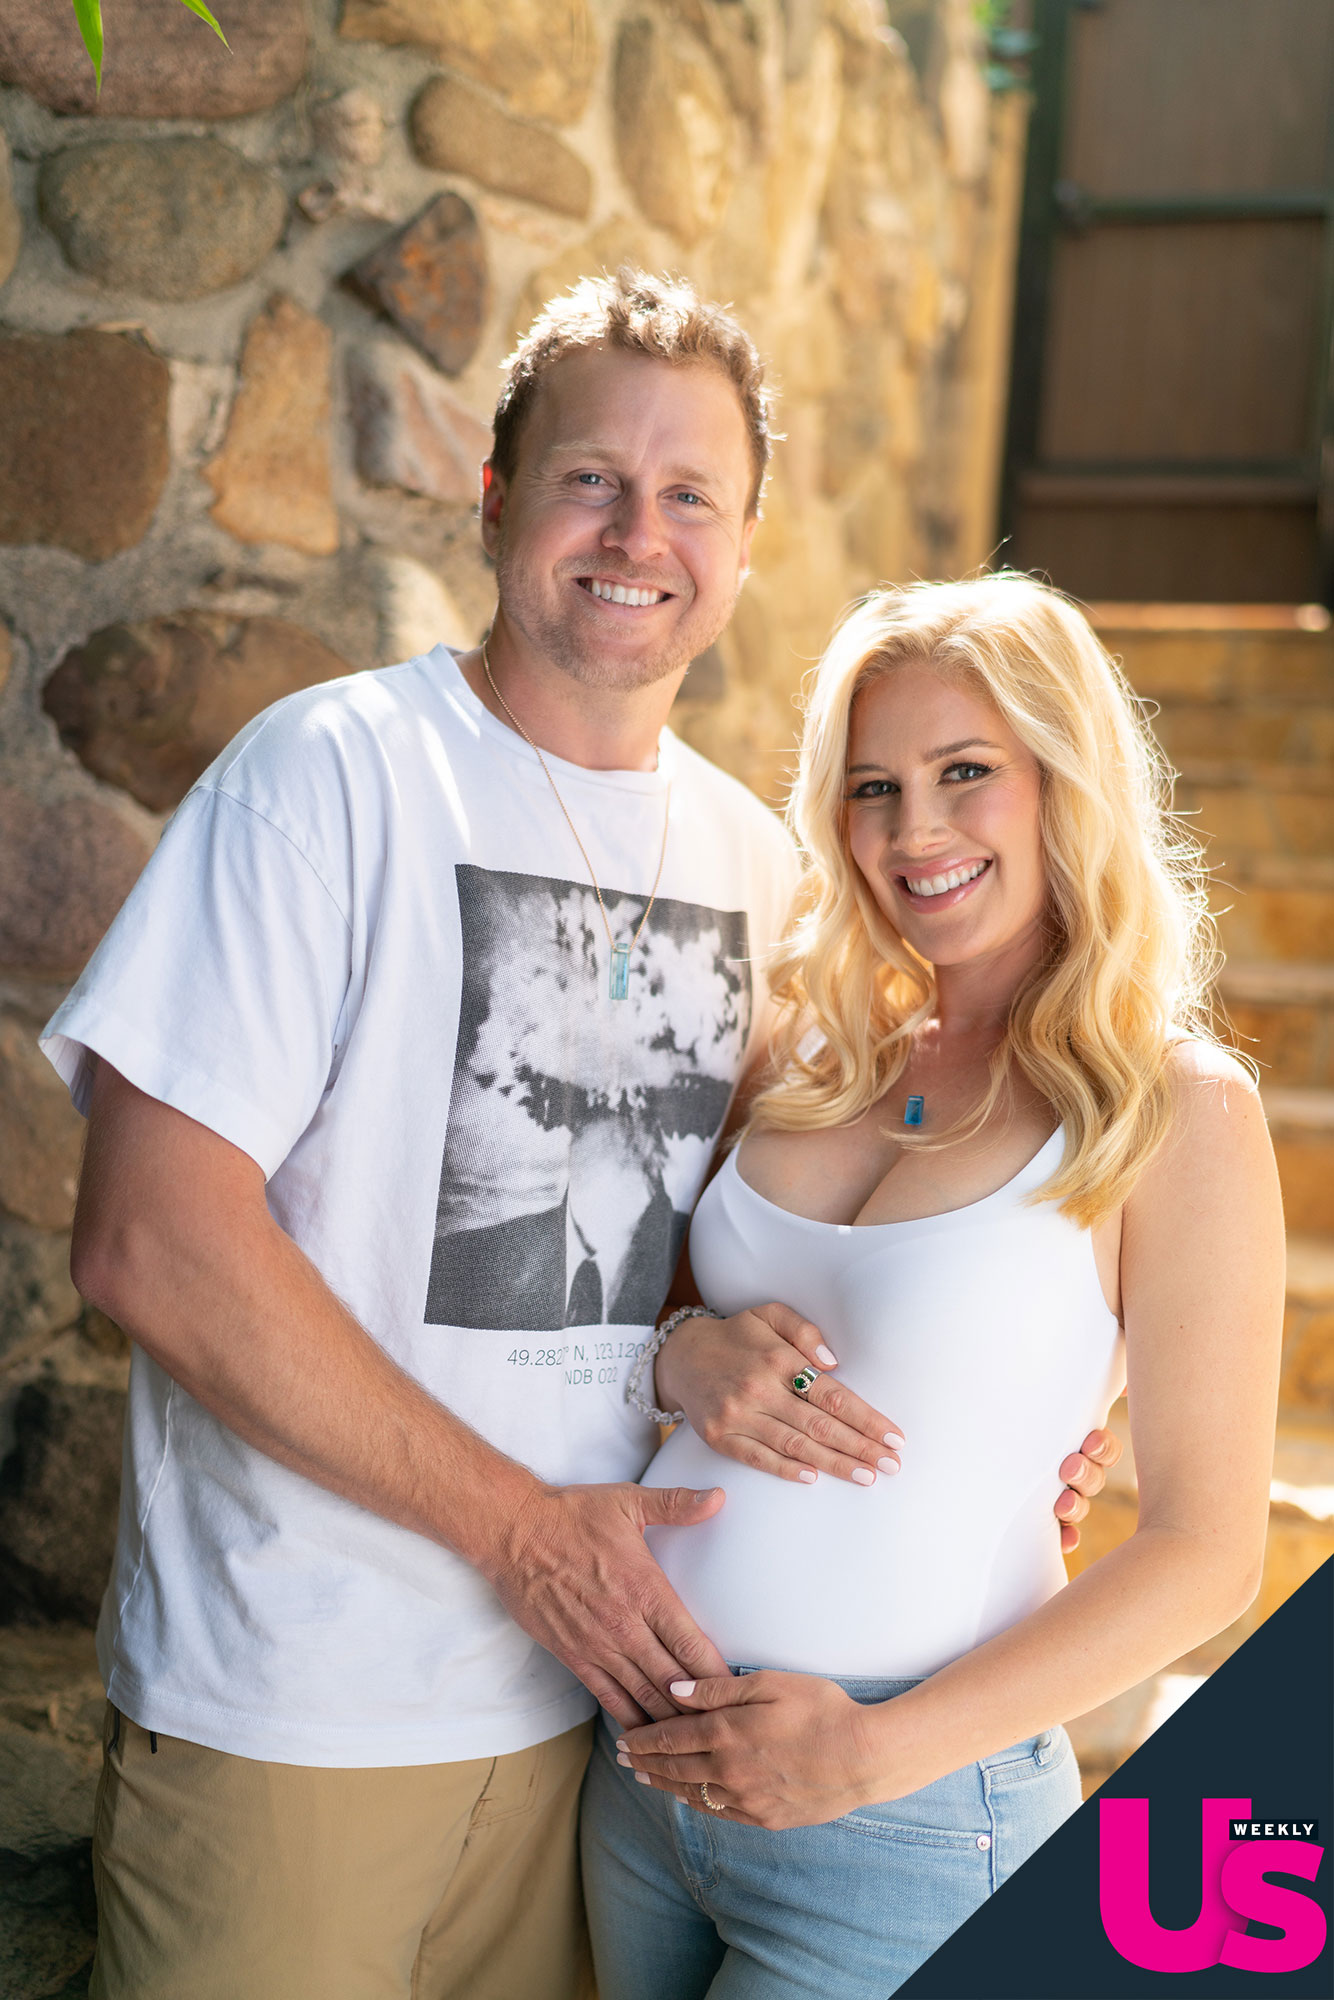 Heidi Montag Pregnant, Expecting Baby No. 2 With Spencer Pratt: Pics